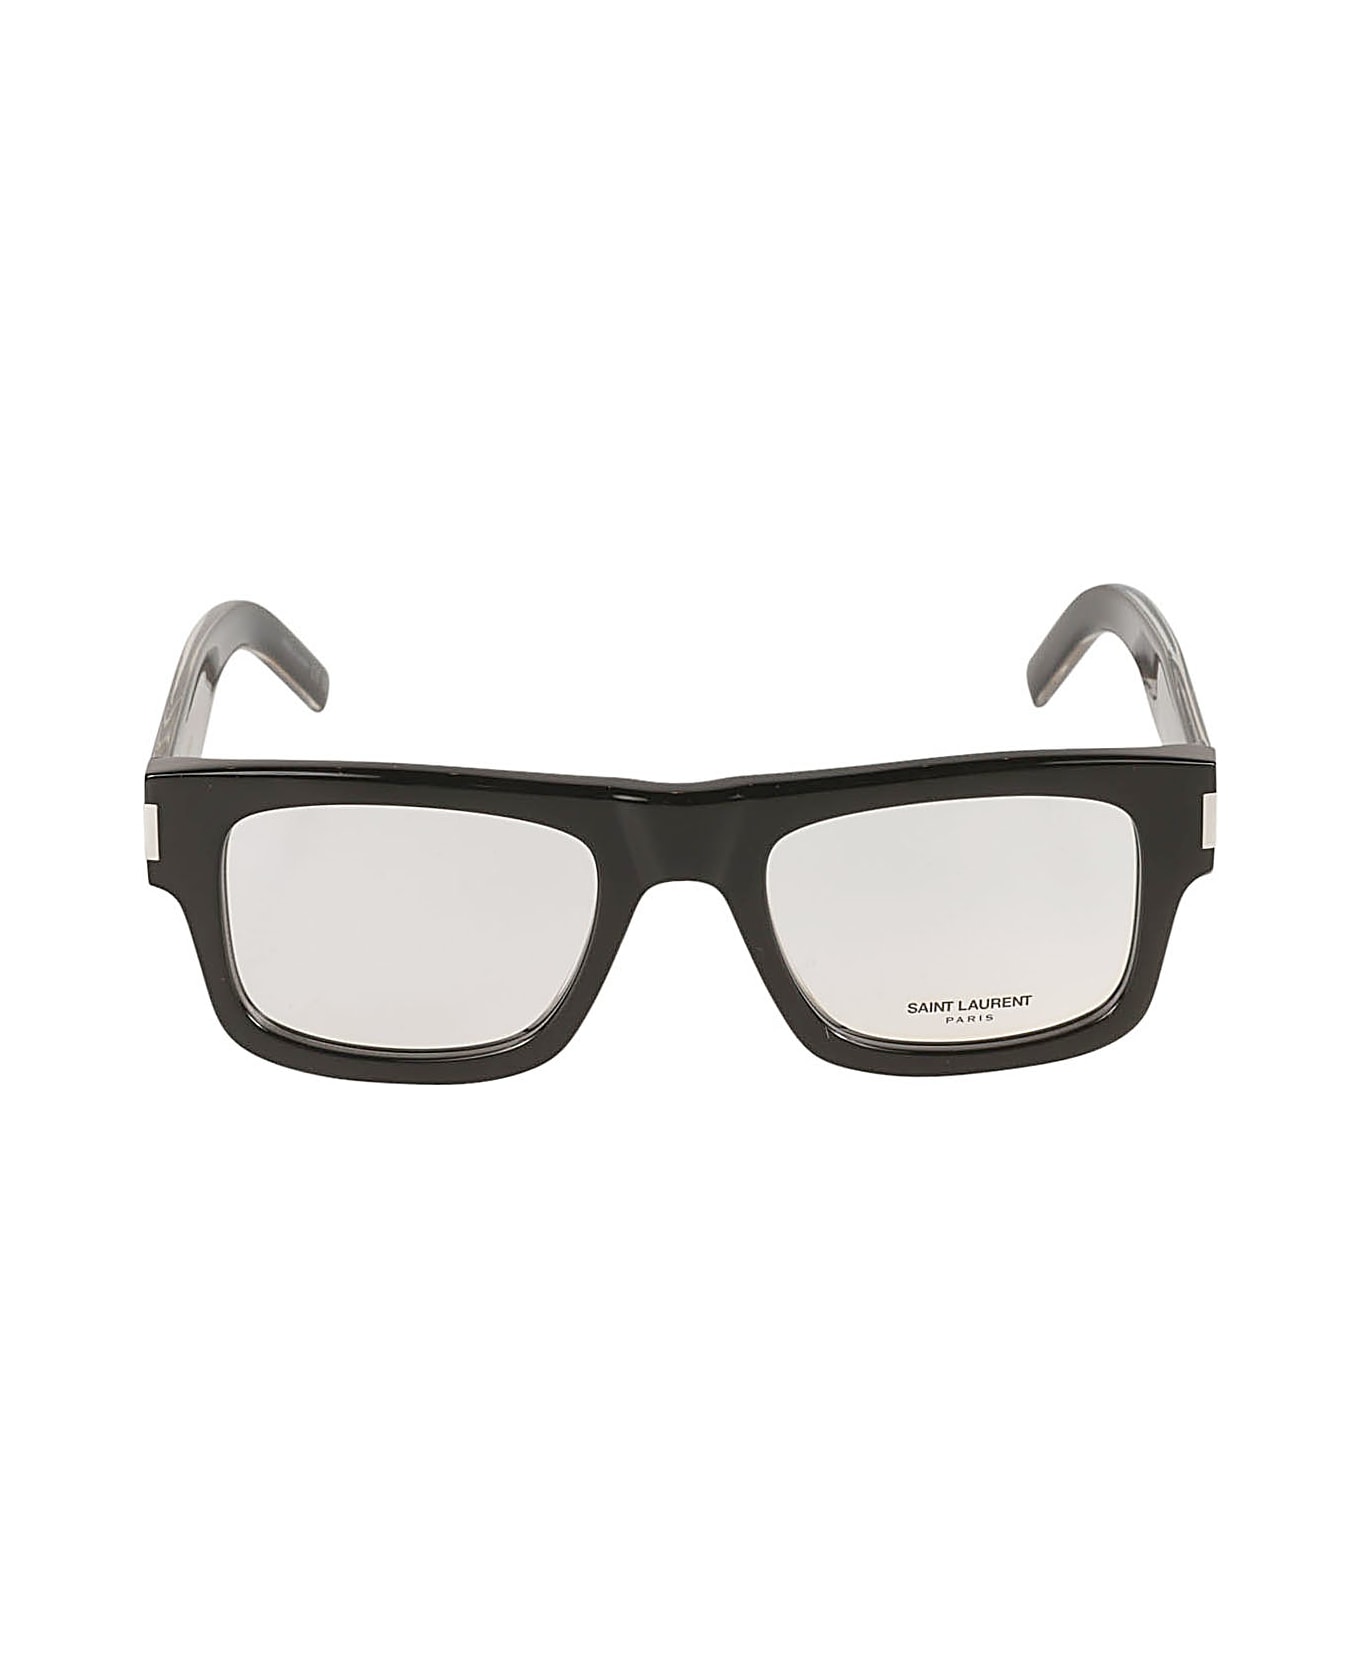 Saint Laurent Eyewear Square Frame Classic Glasses - Black/Crystal/Transparent